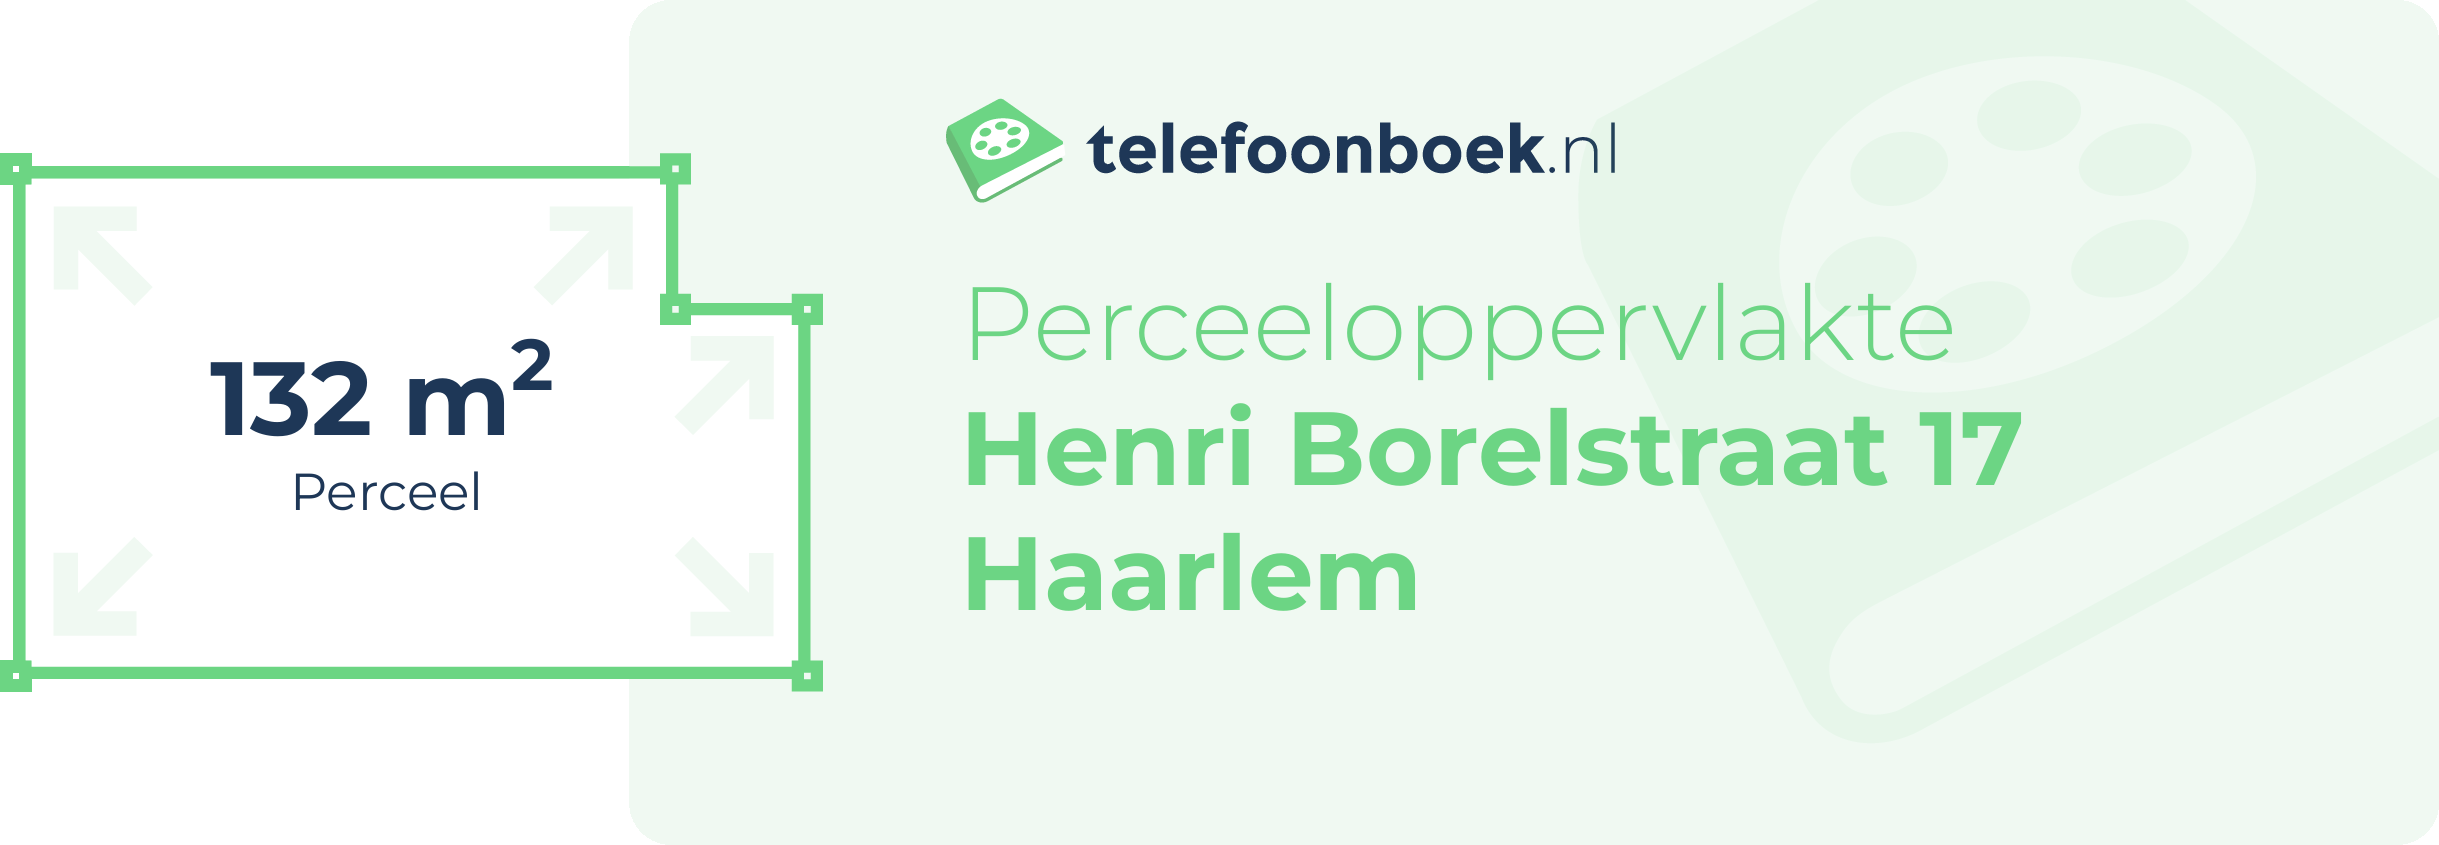 Perceeloppervlakte Henri Borelstraat 17 Haarlem